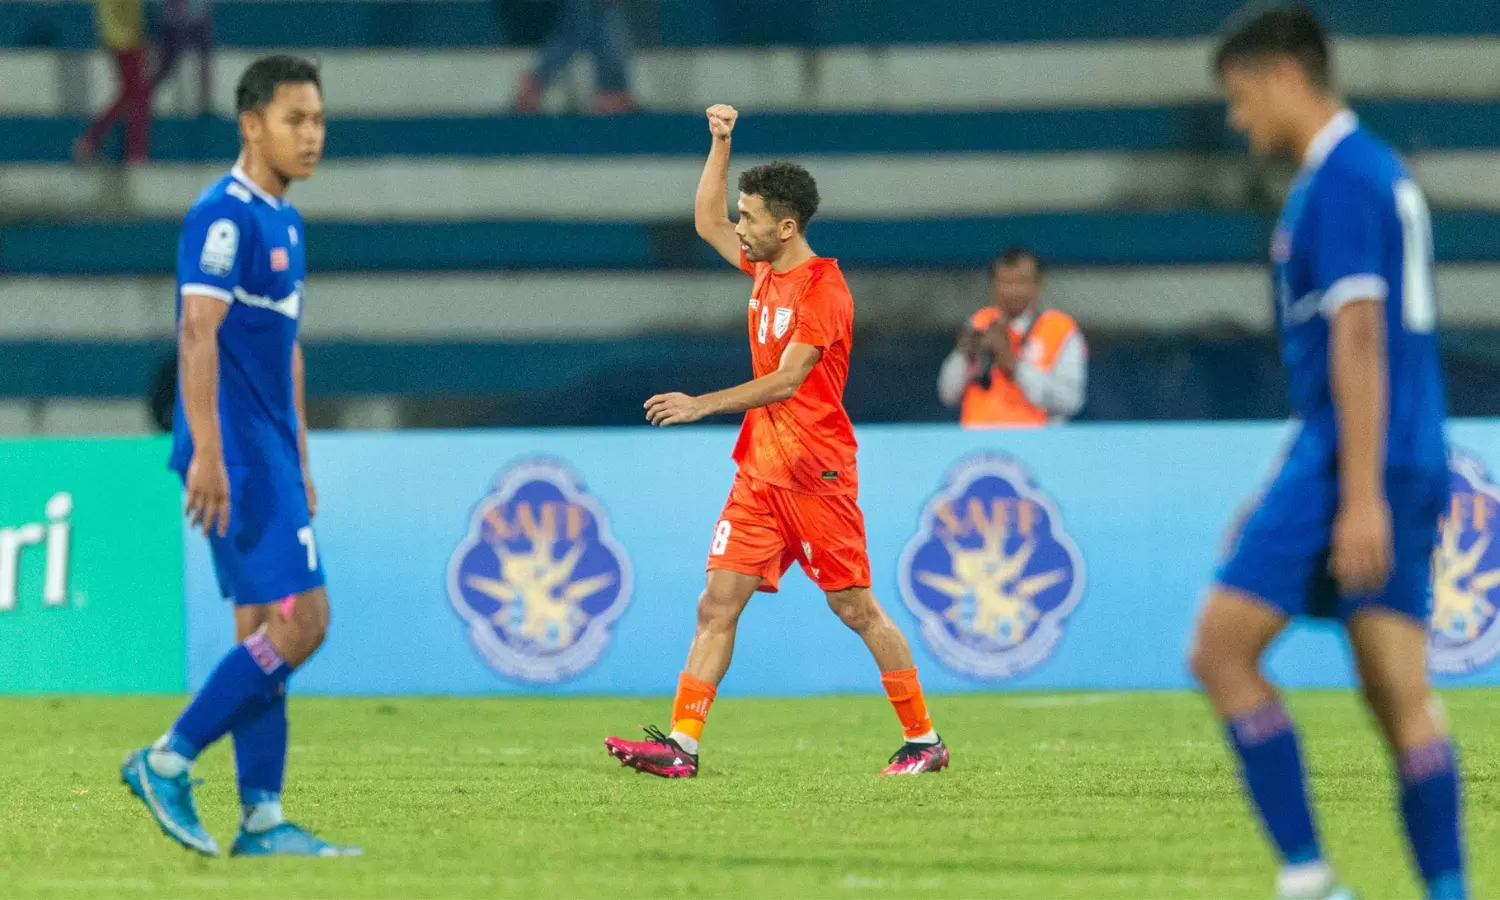 India vs Nepal Football Highlights, SAFF Championship 2023: India